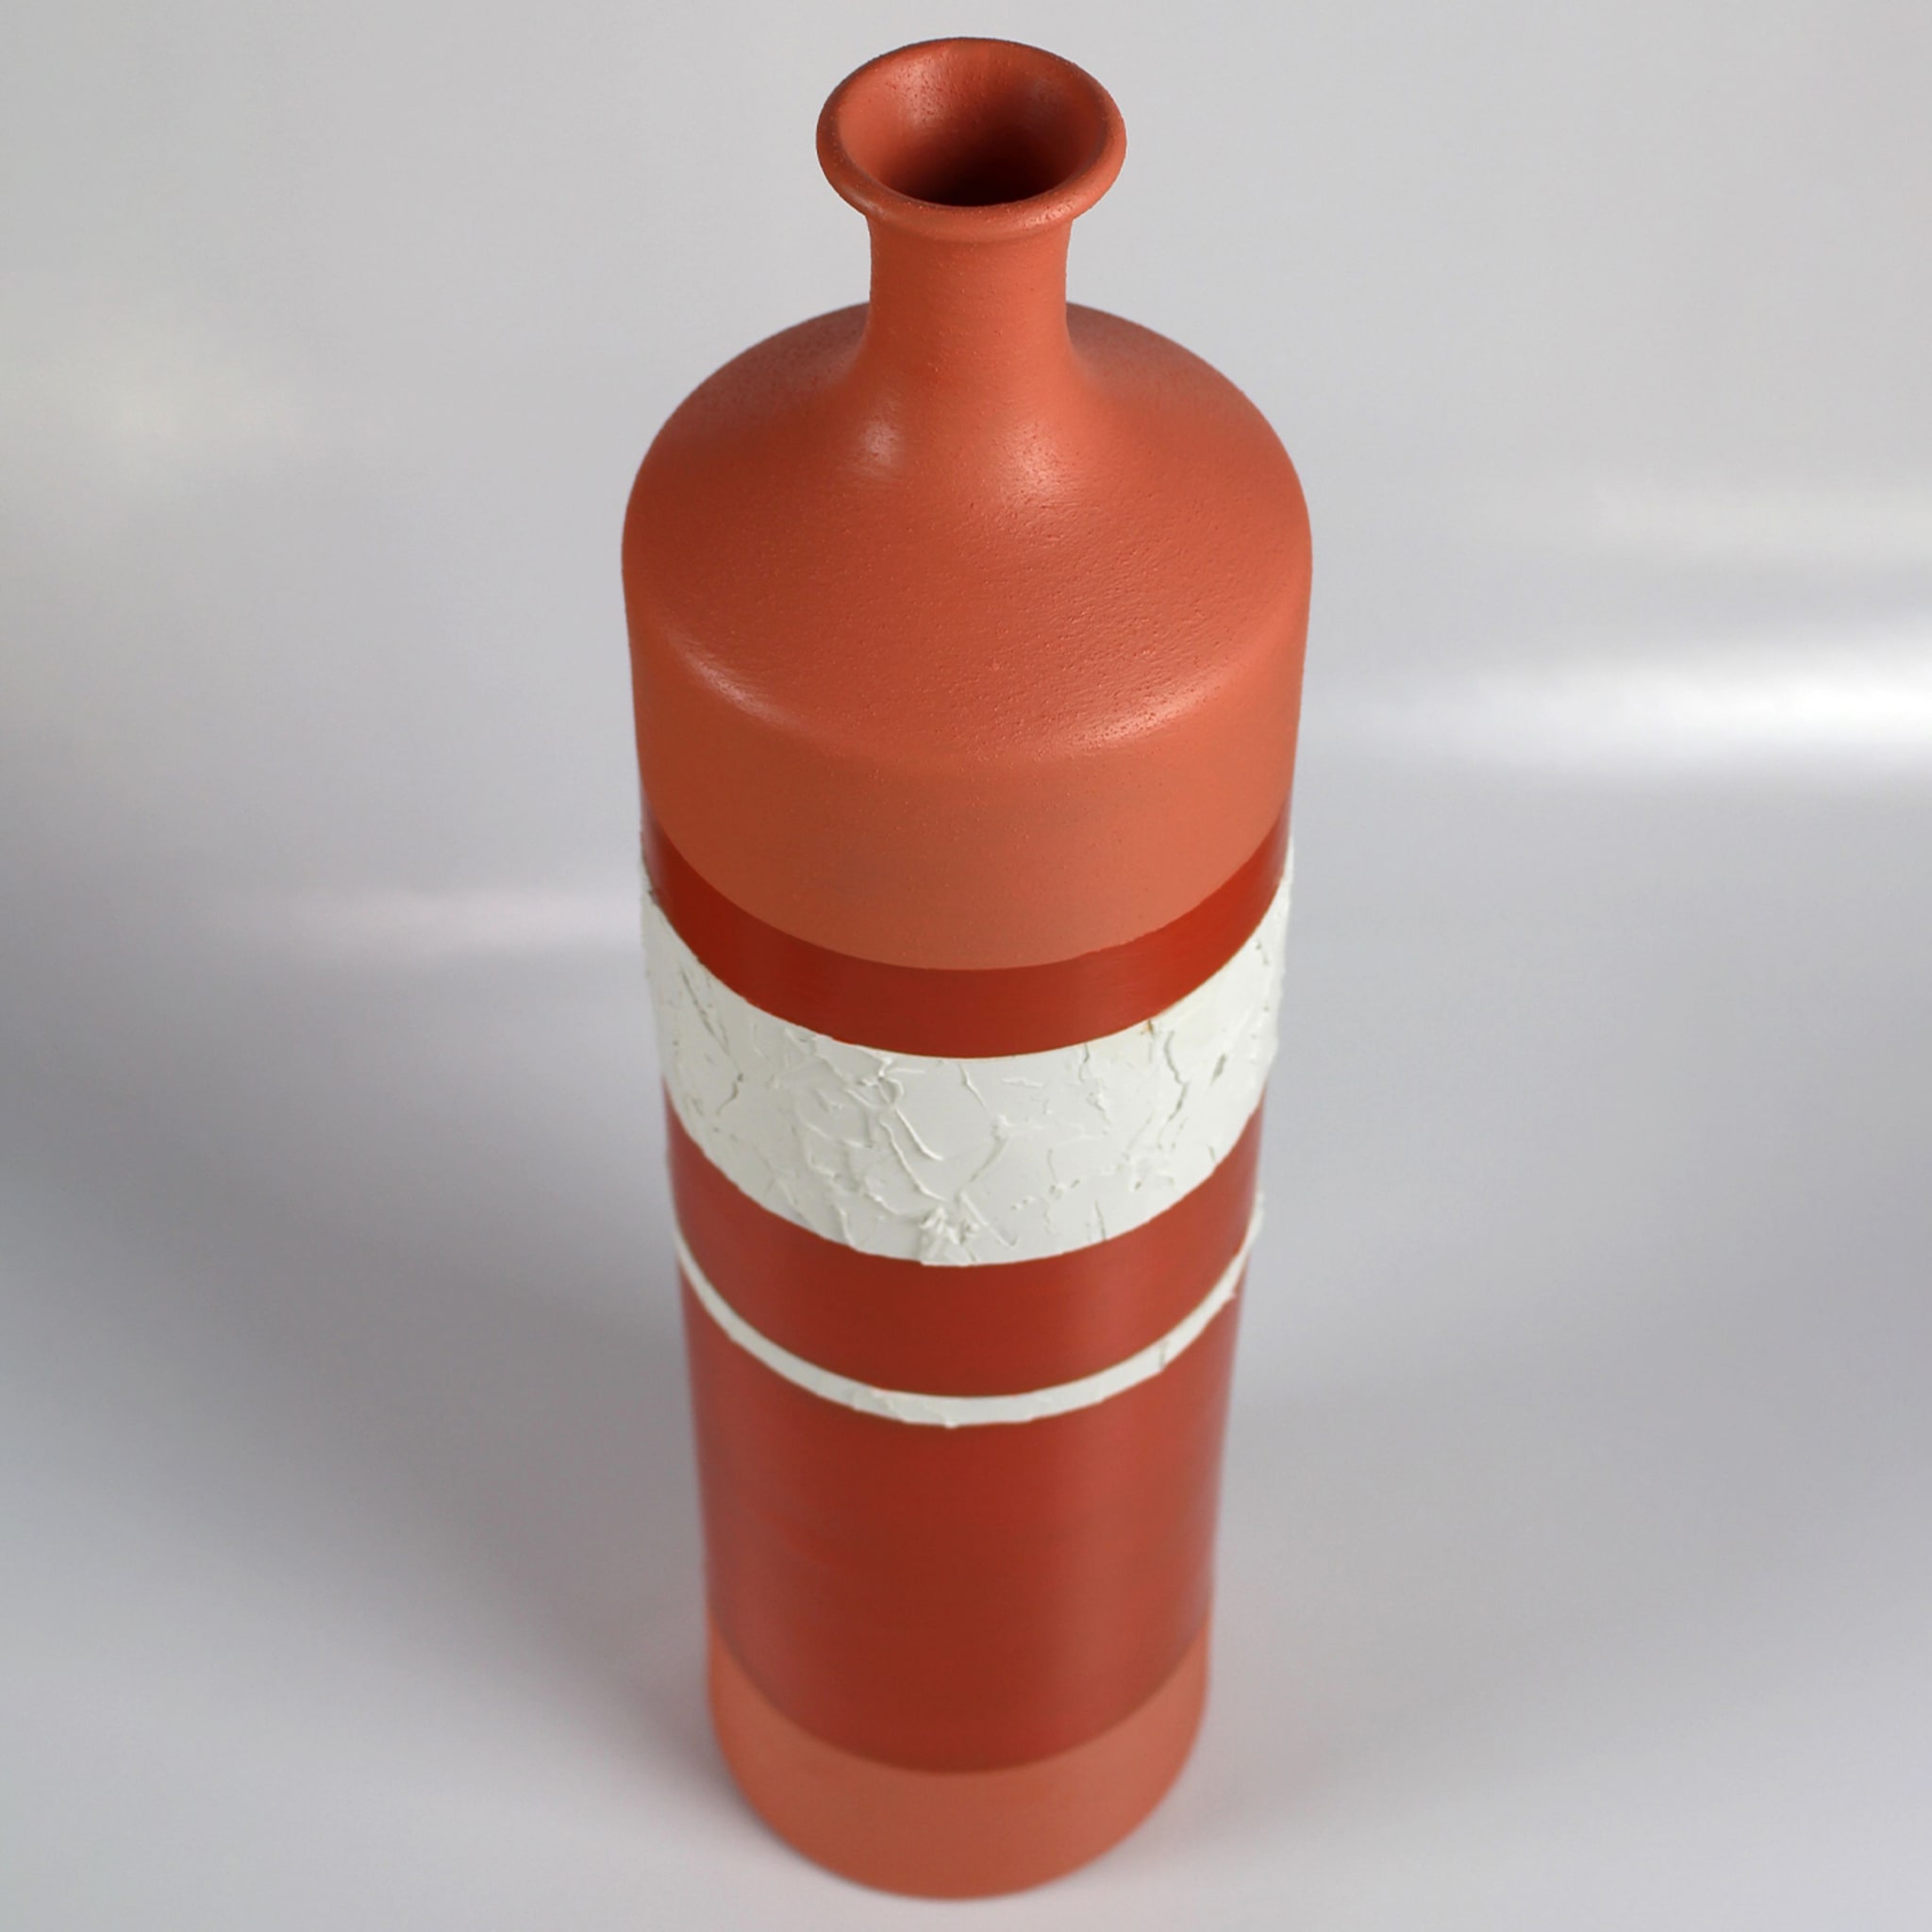 Red & White Vase 24 by Mascia Meccani - Alternative view 1